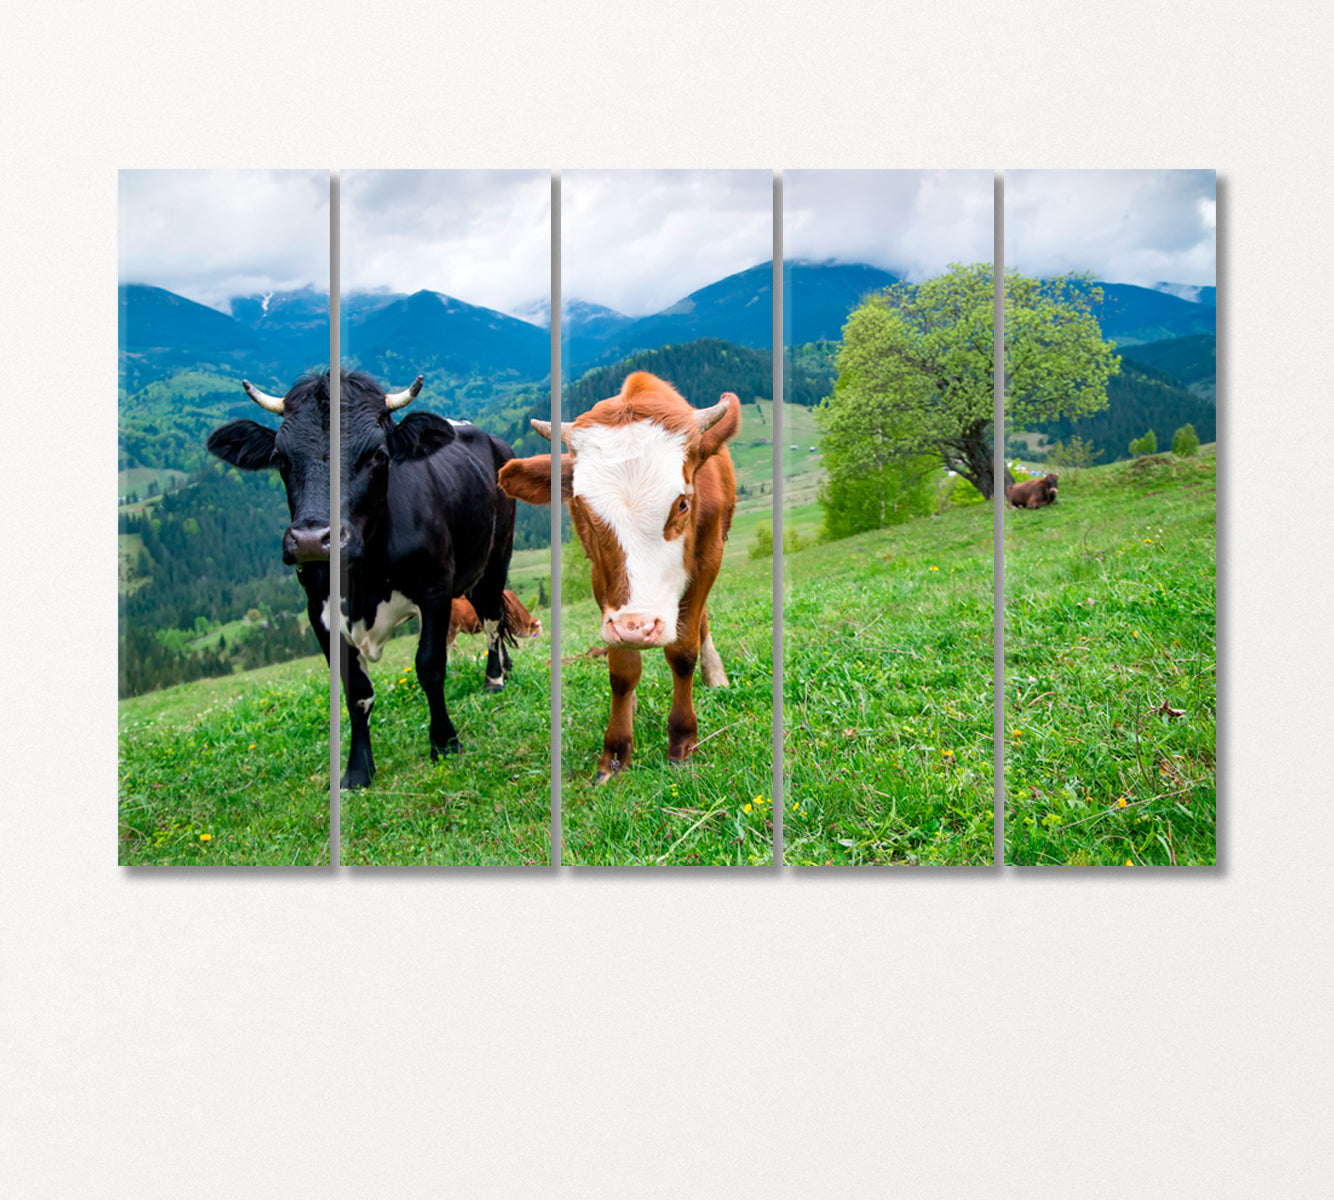 Cows in Meadow Canvas Print-Canvas Print-CetArt-5 Panels-36x24 inches-CetArt